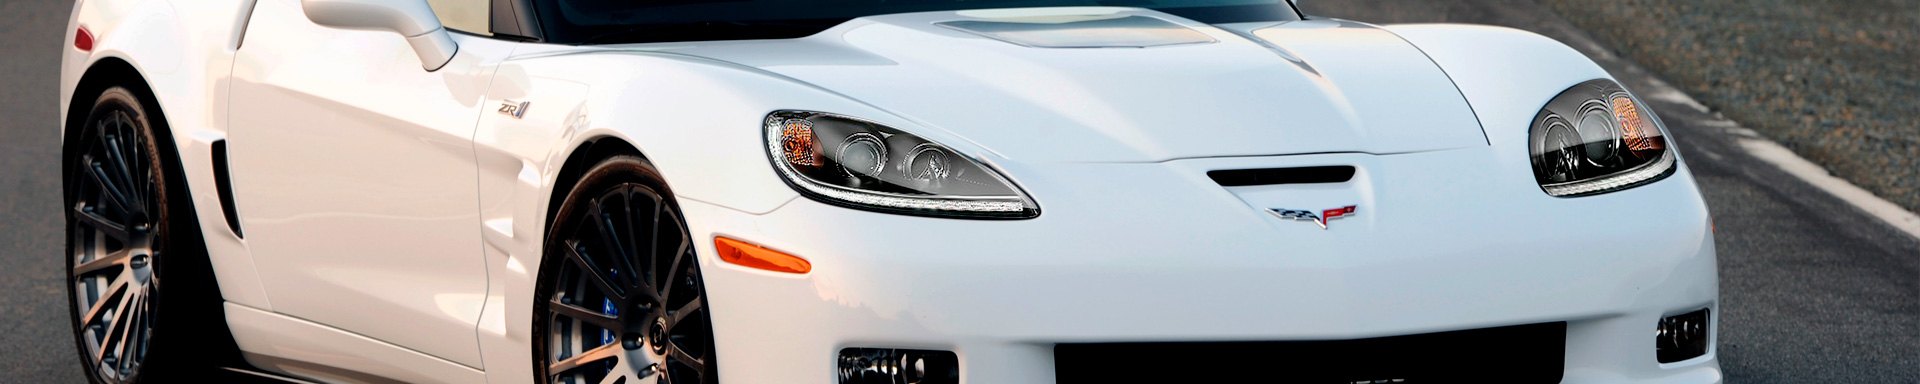 New Custom Headlights For Chevy Corvette C6 by Anzo